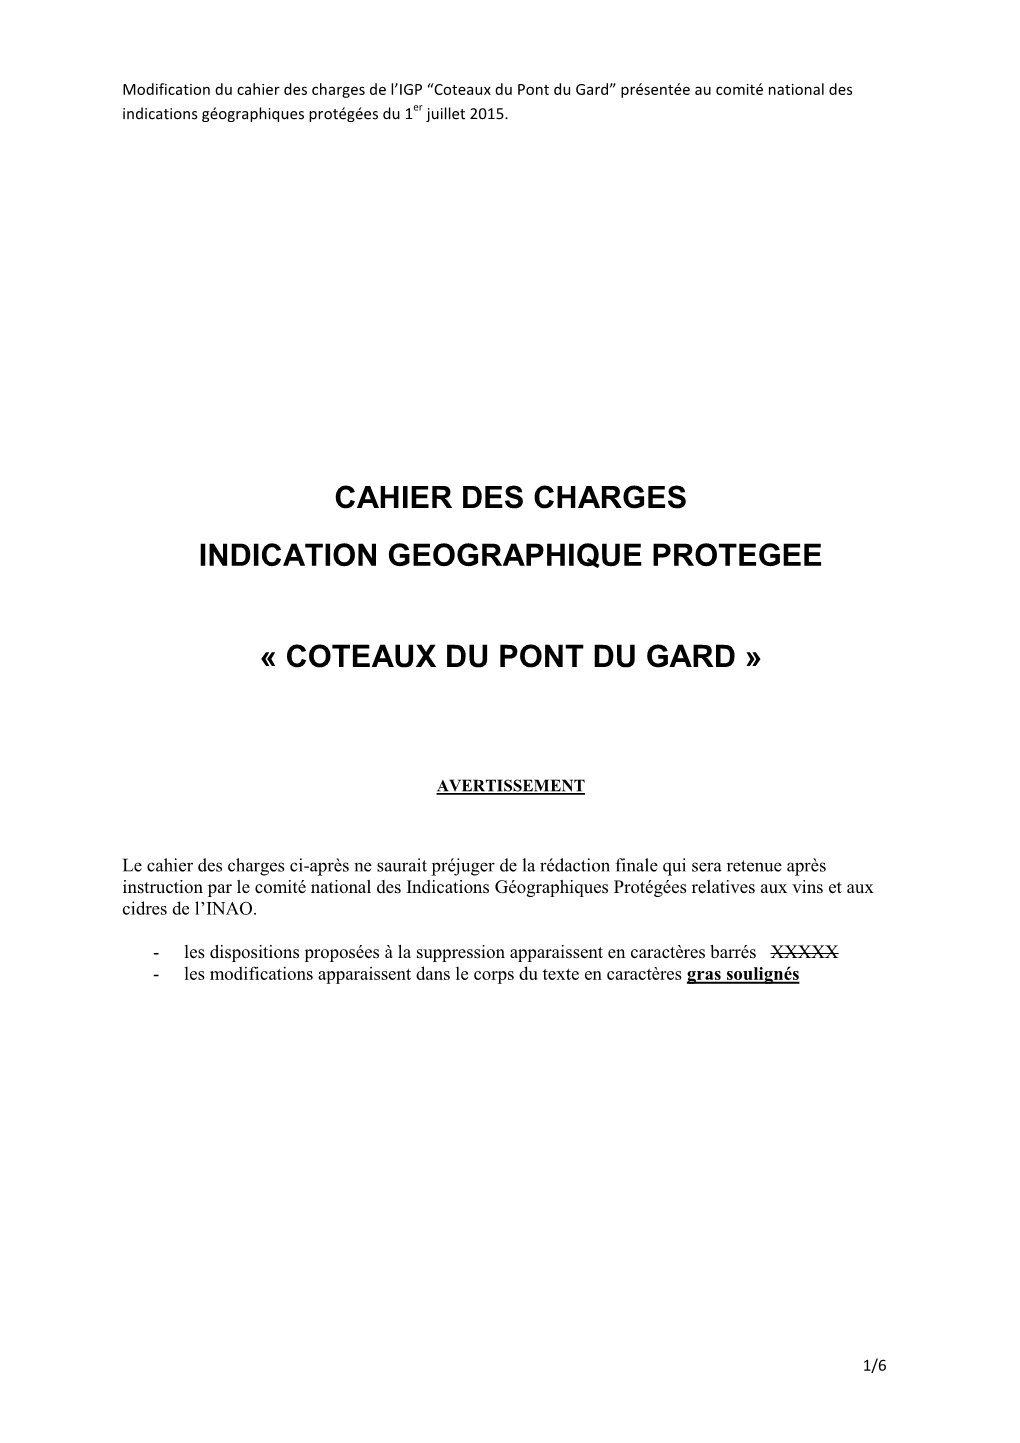 Cahier Des Charges Indication Geographique Protegee « Coteaux